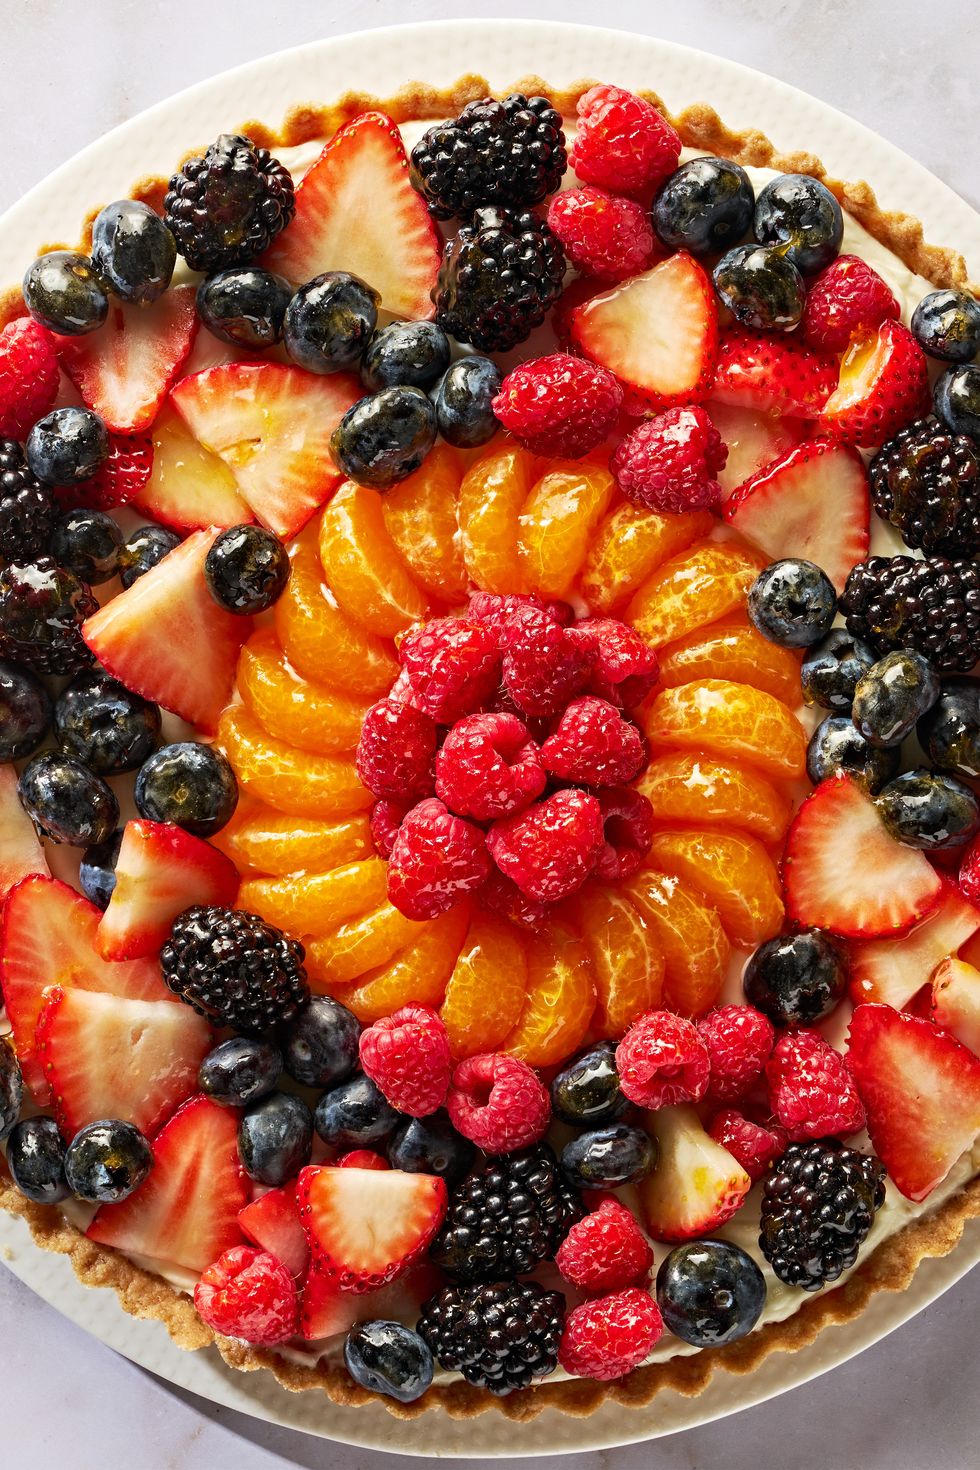 tart topped with blueberries, raspberries, sliced strawberries, blackberries, and orange slices